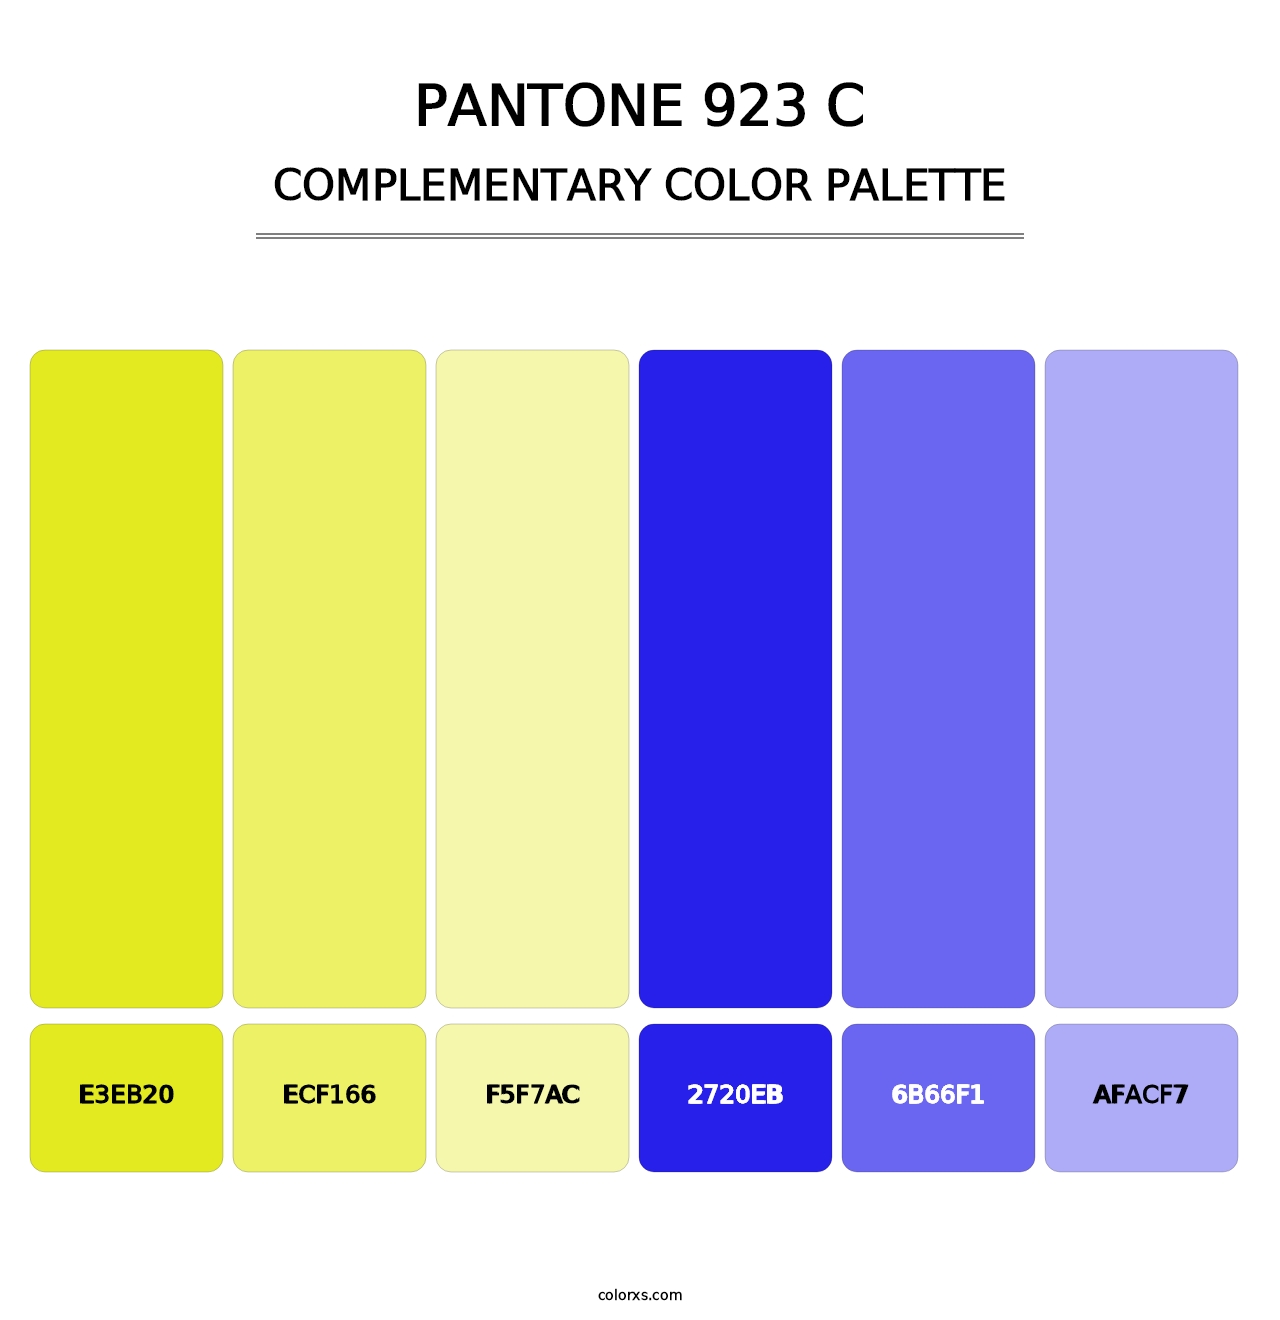 PANTONE 923 C - Complementary Color Palette